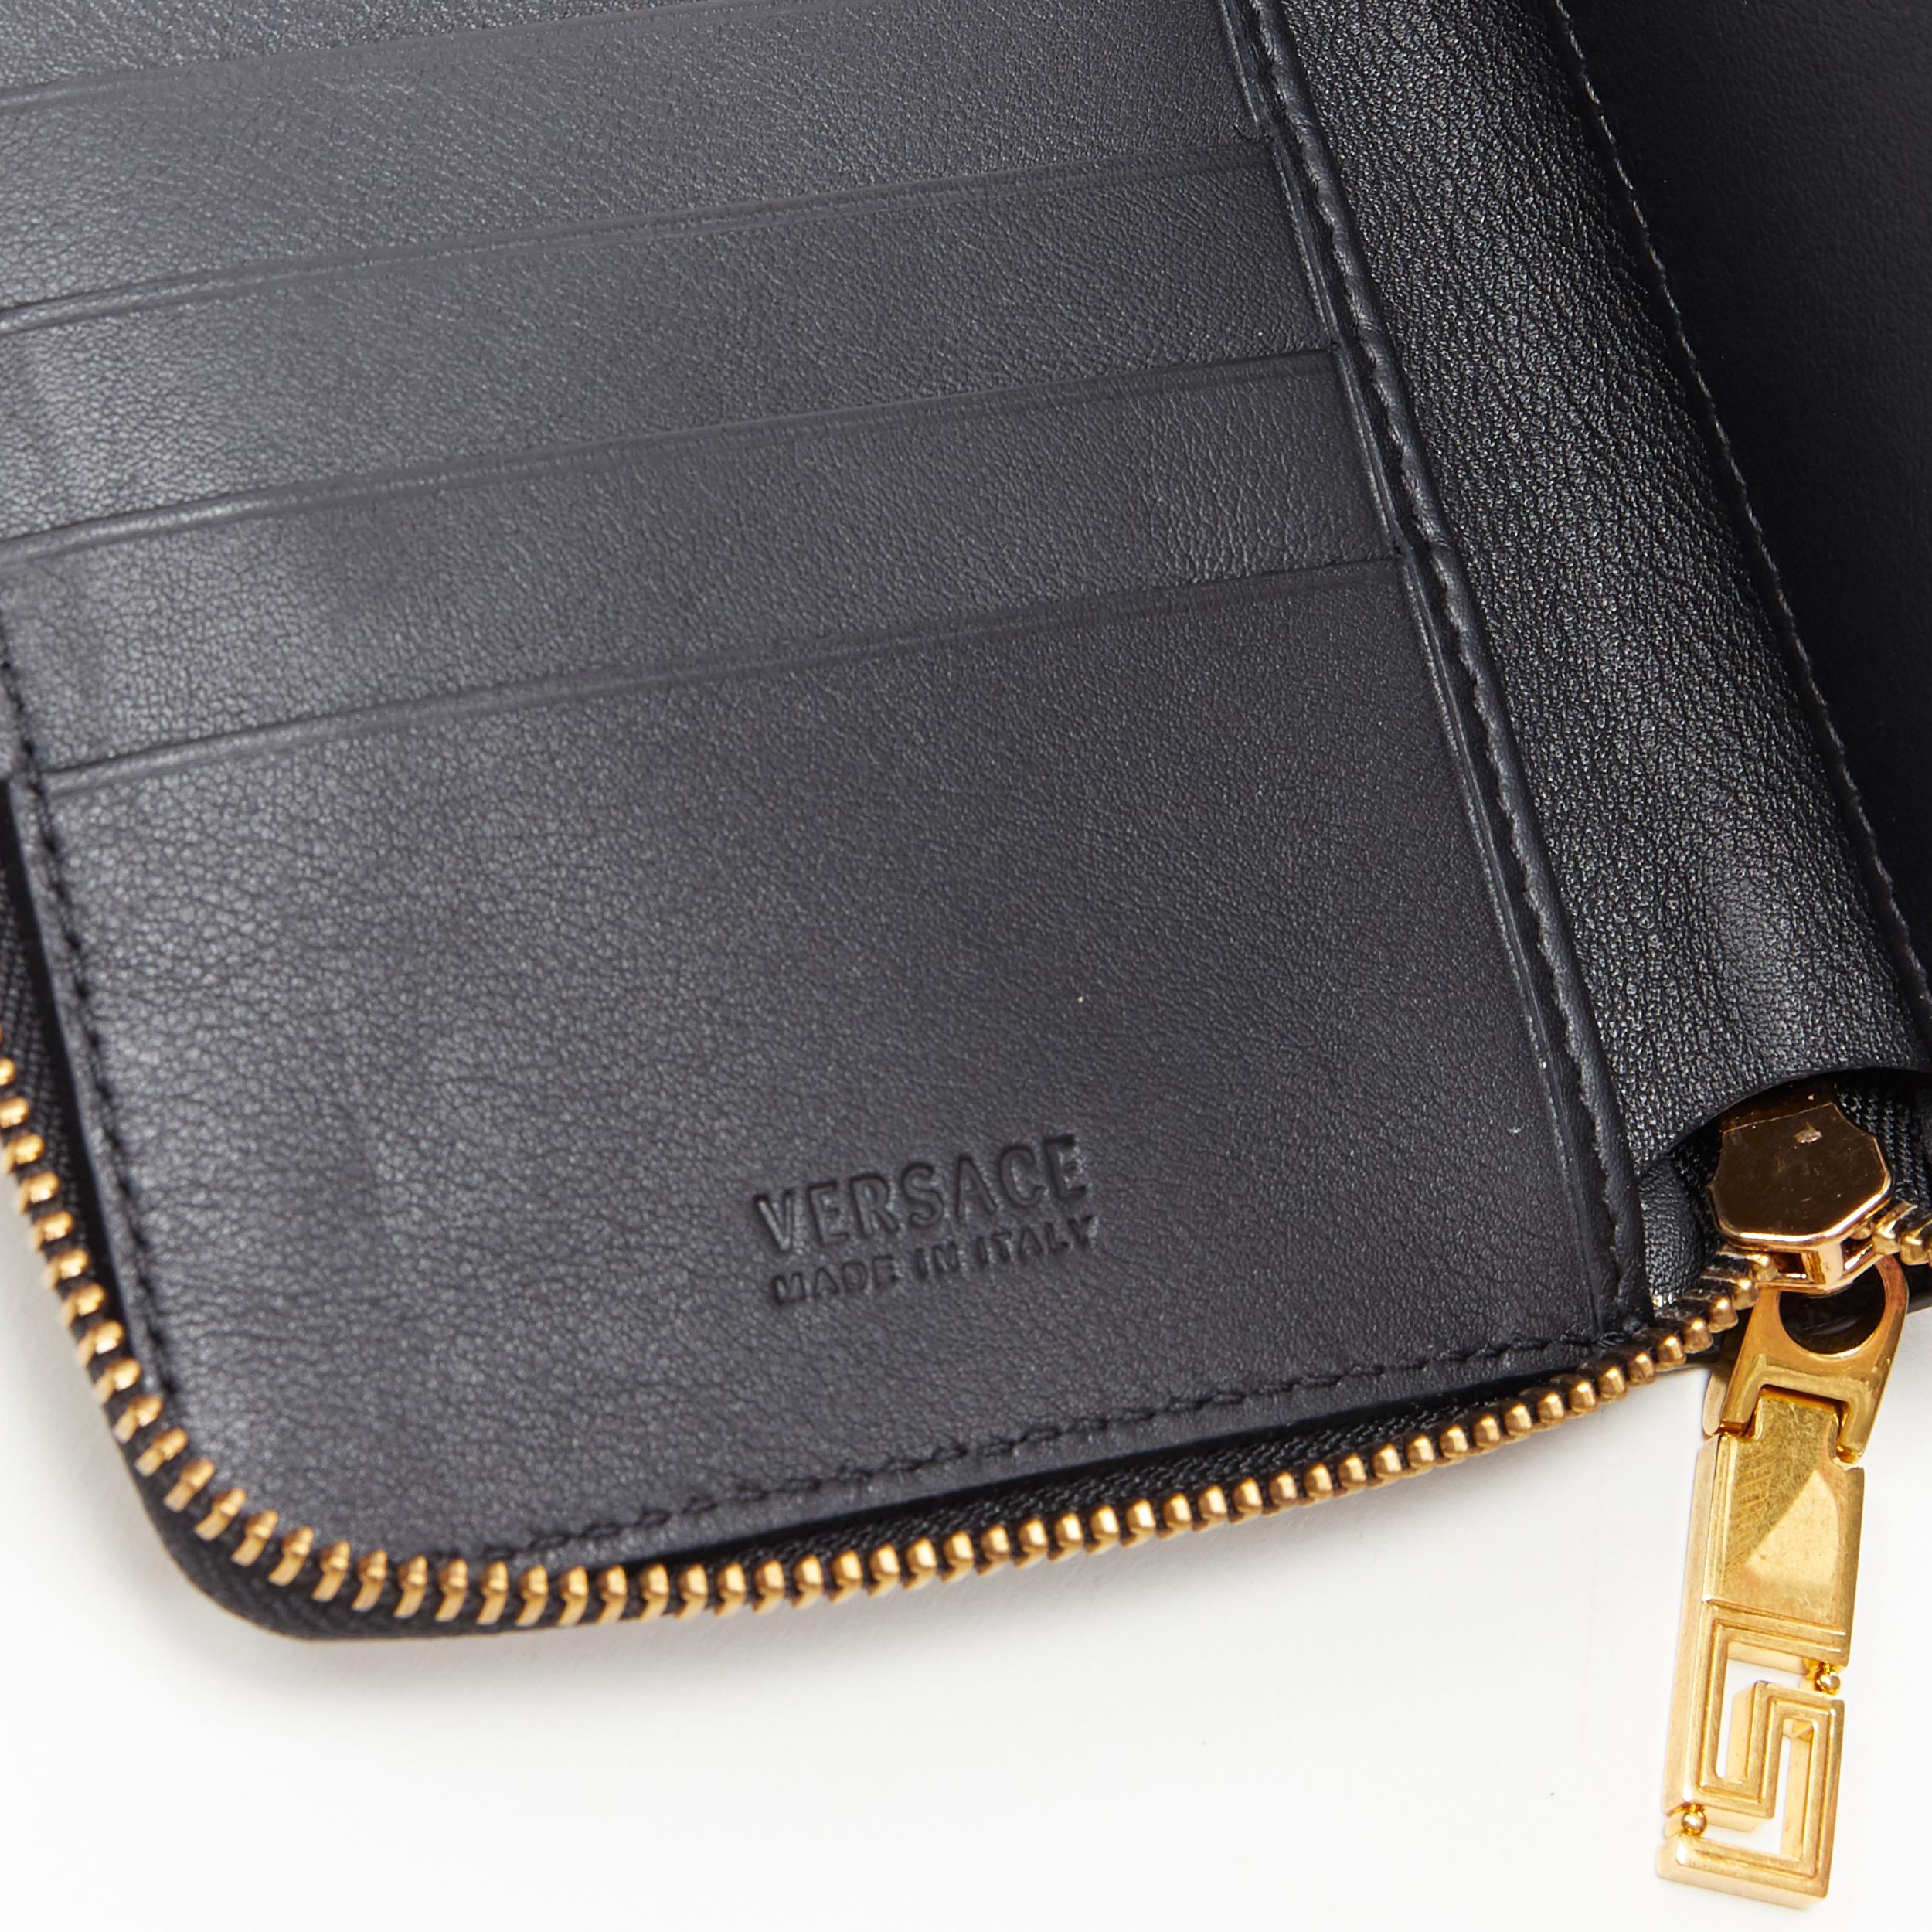 Orange new VERSACE Black Gold Baroque print leather gold Medusa face zip around wallet